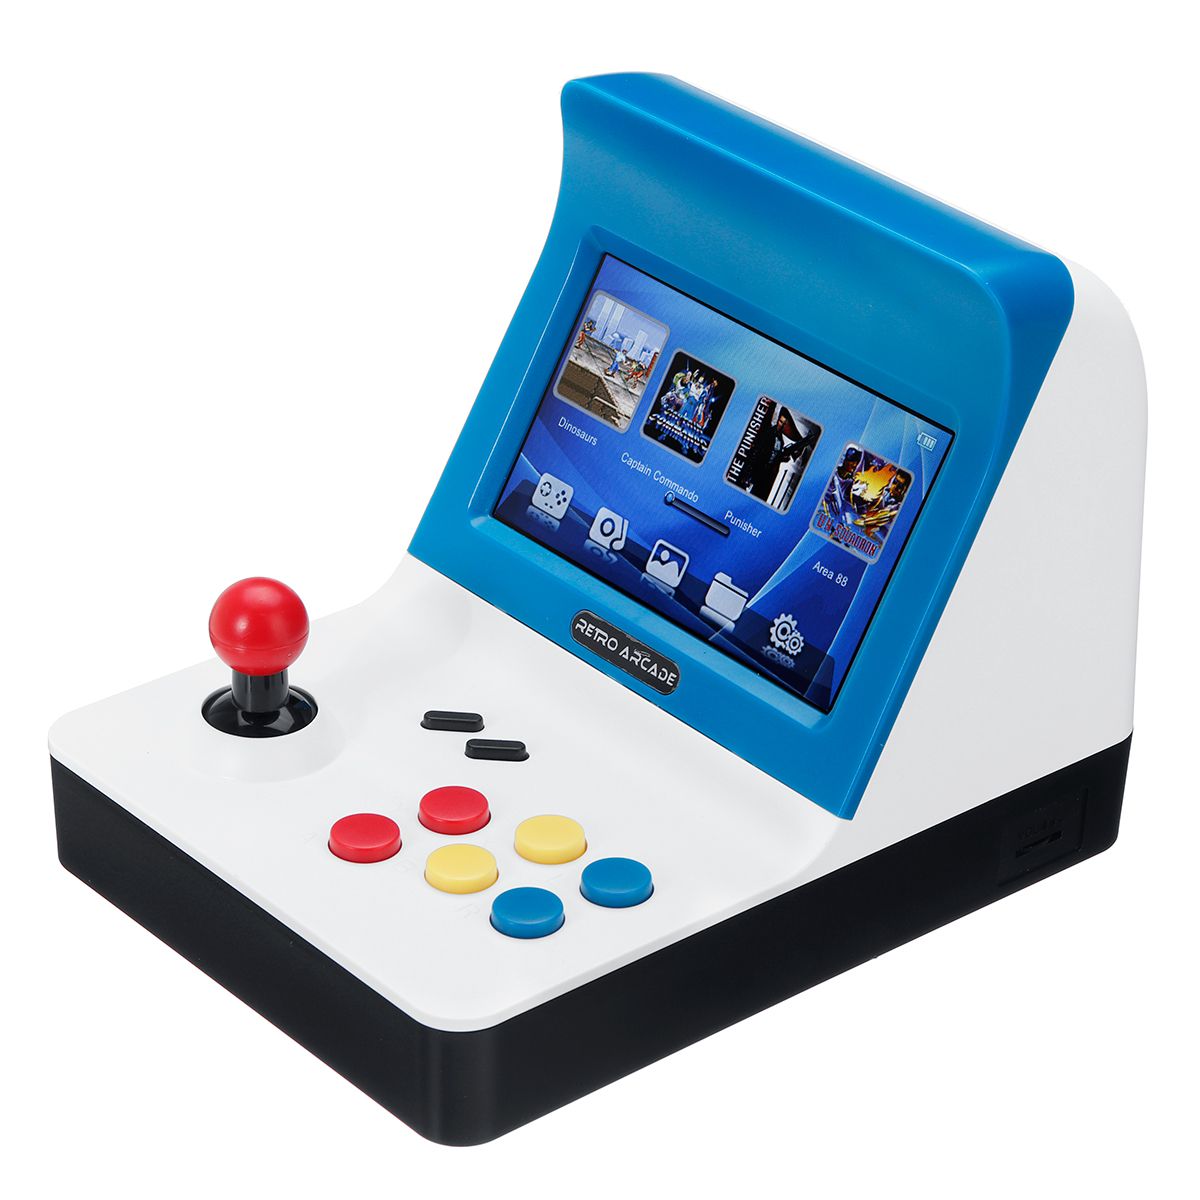 Retro-Arcade-Mini-Handheld-Game-Console-3000-Classic-Video-Games-Support-for-CP1-CP2-NEOGEO-GBA-SFC--1473092